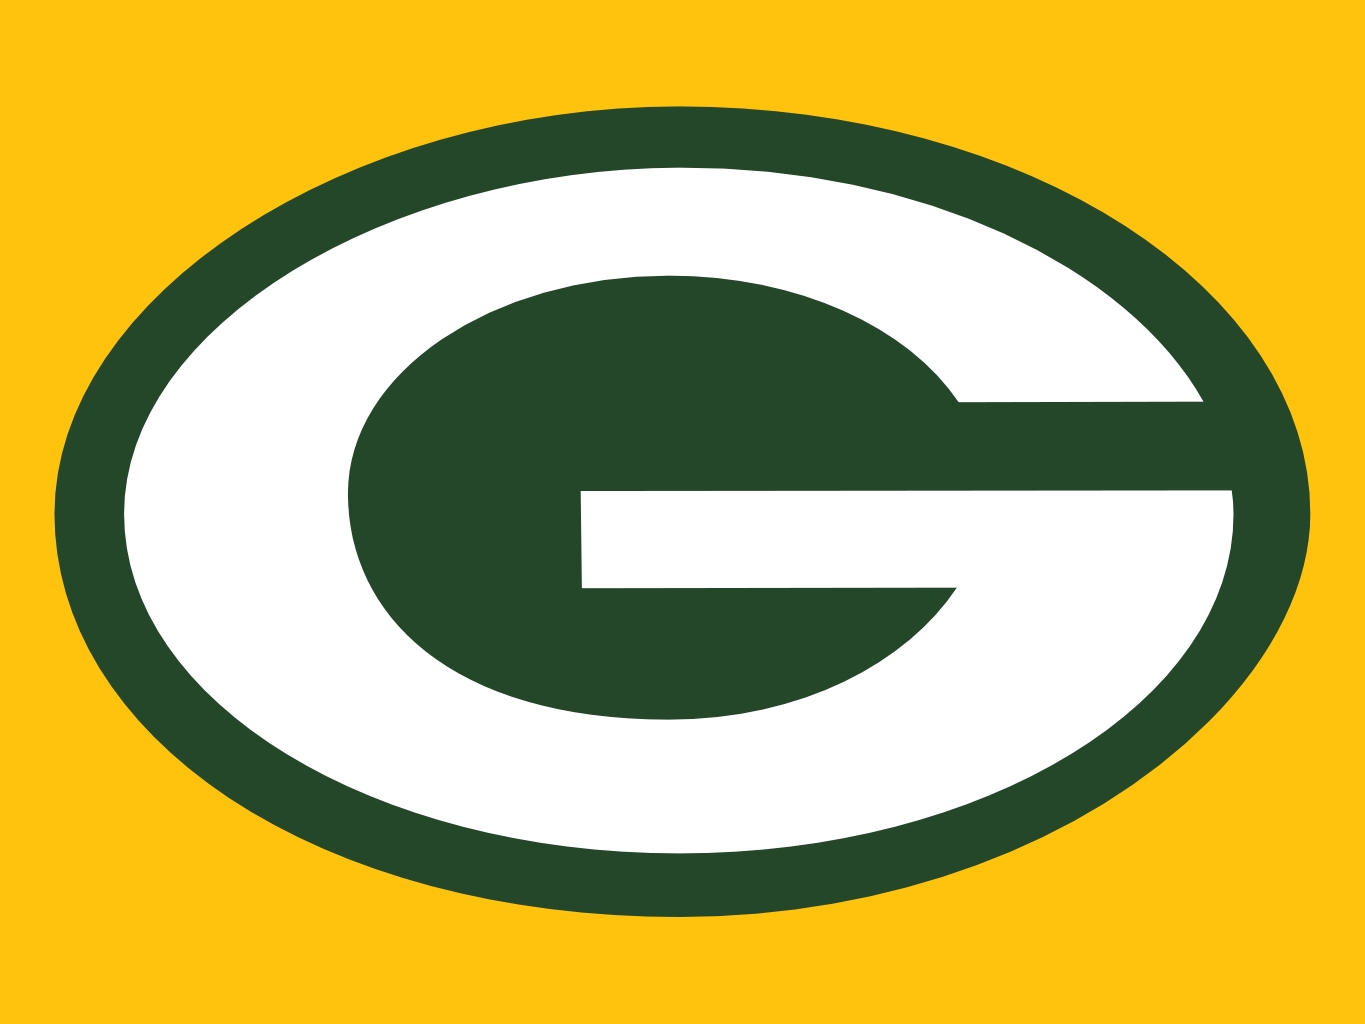 Green Bay Packer Logo Clip Art - ClipArt Best | taylor | Pinterest | Logos, Bays and Packers